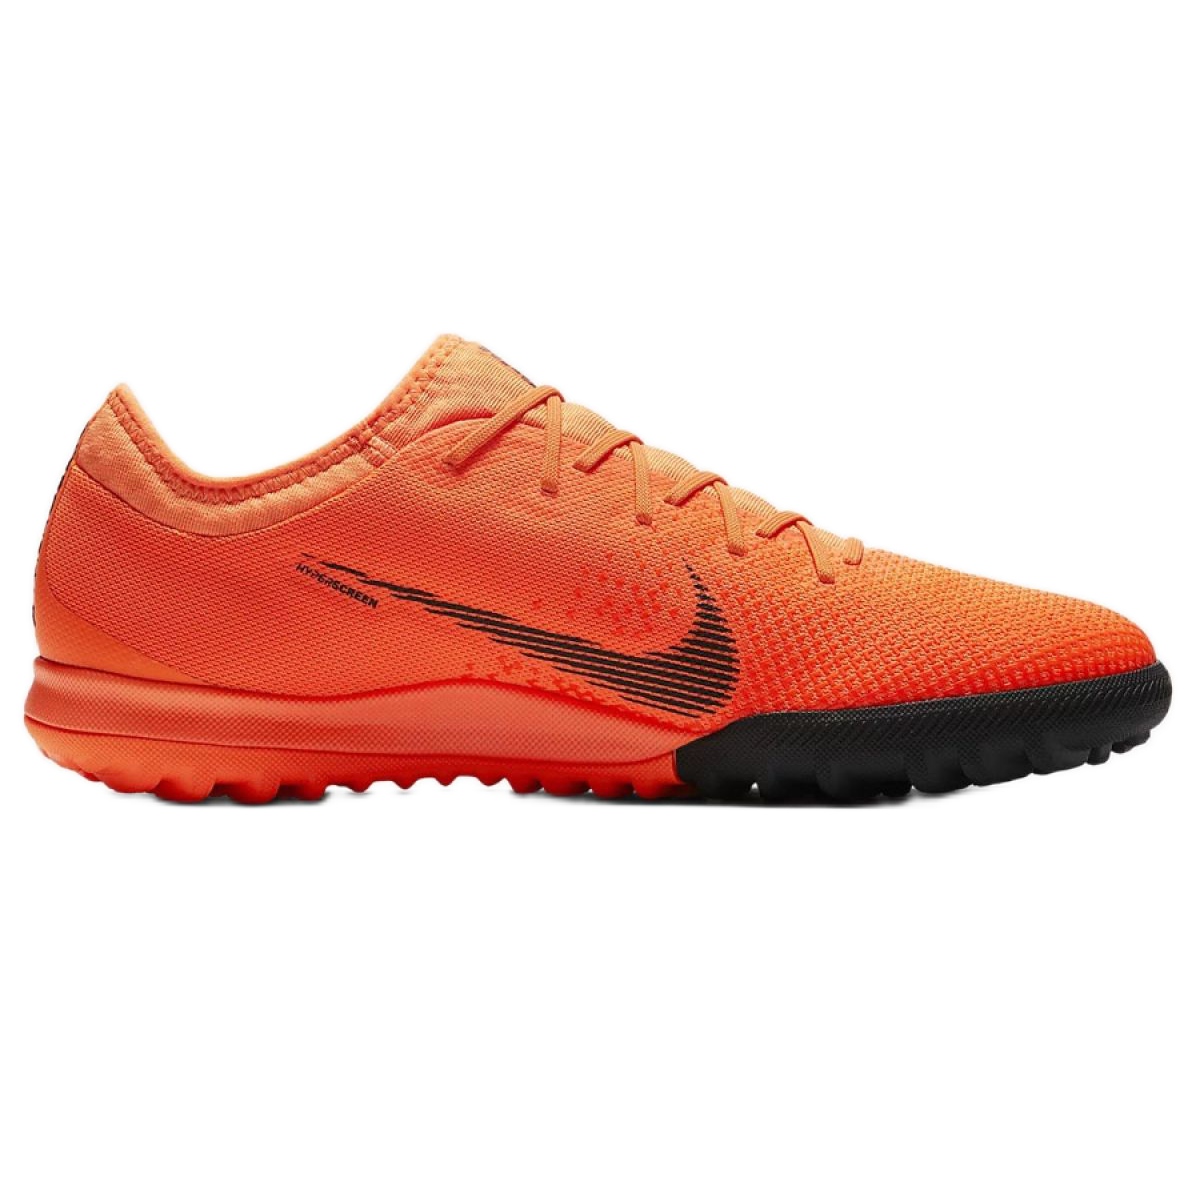 Nike Mercurial Vapor 12 Pro Tf M AH7388-810 soccer shoes orange - KeeShoes